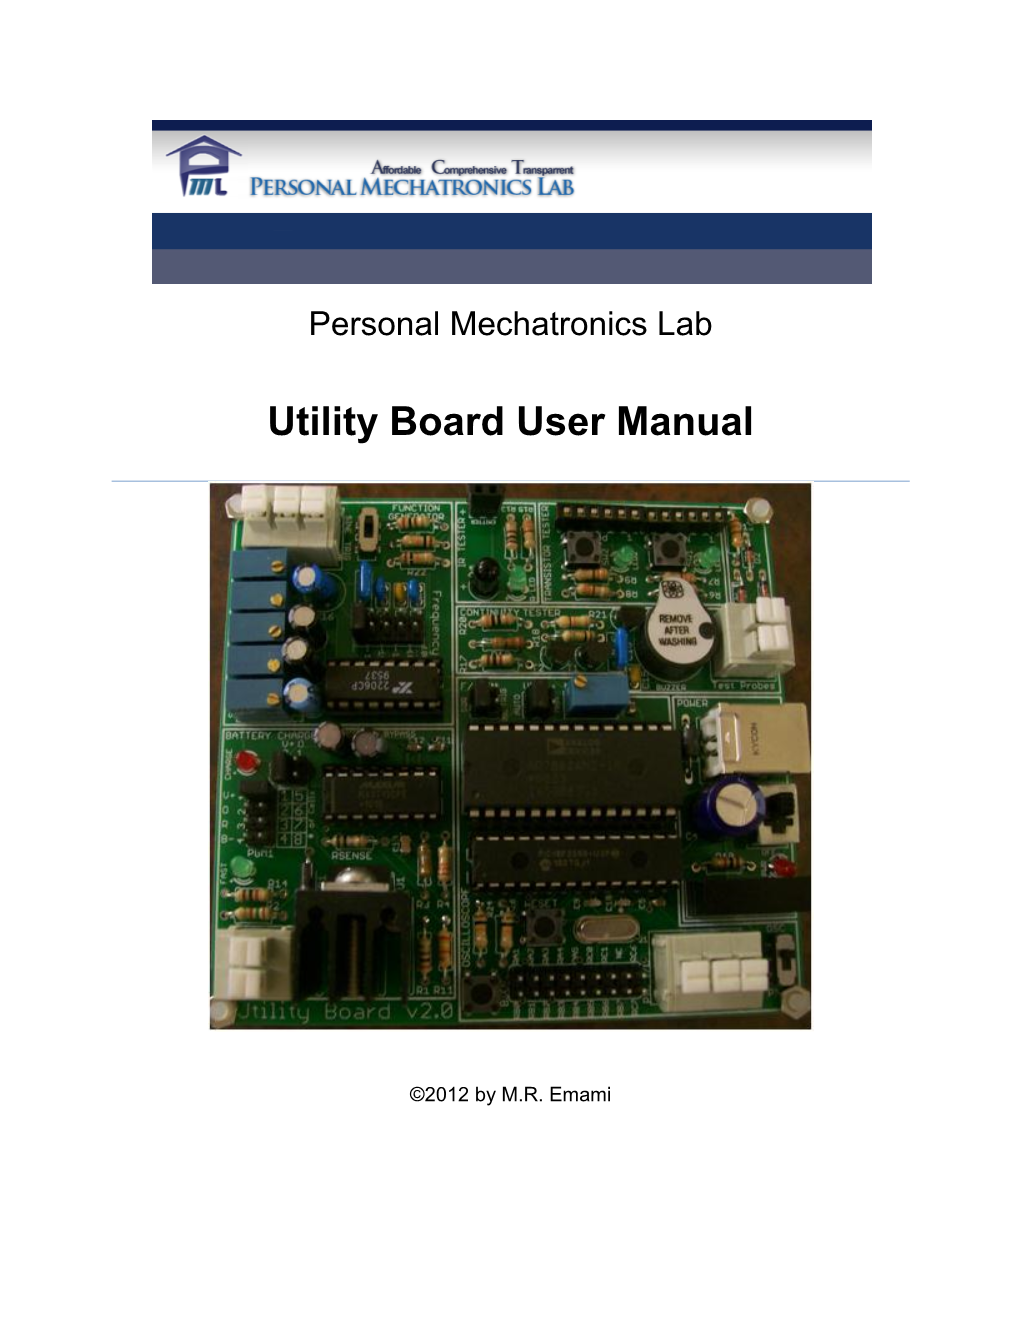 Utility Board User Manual